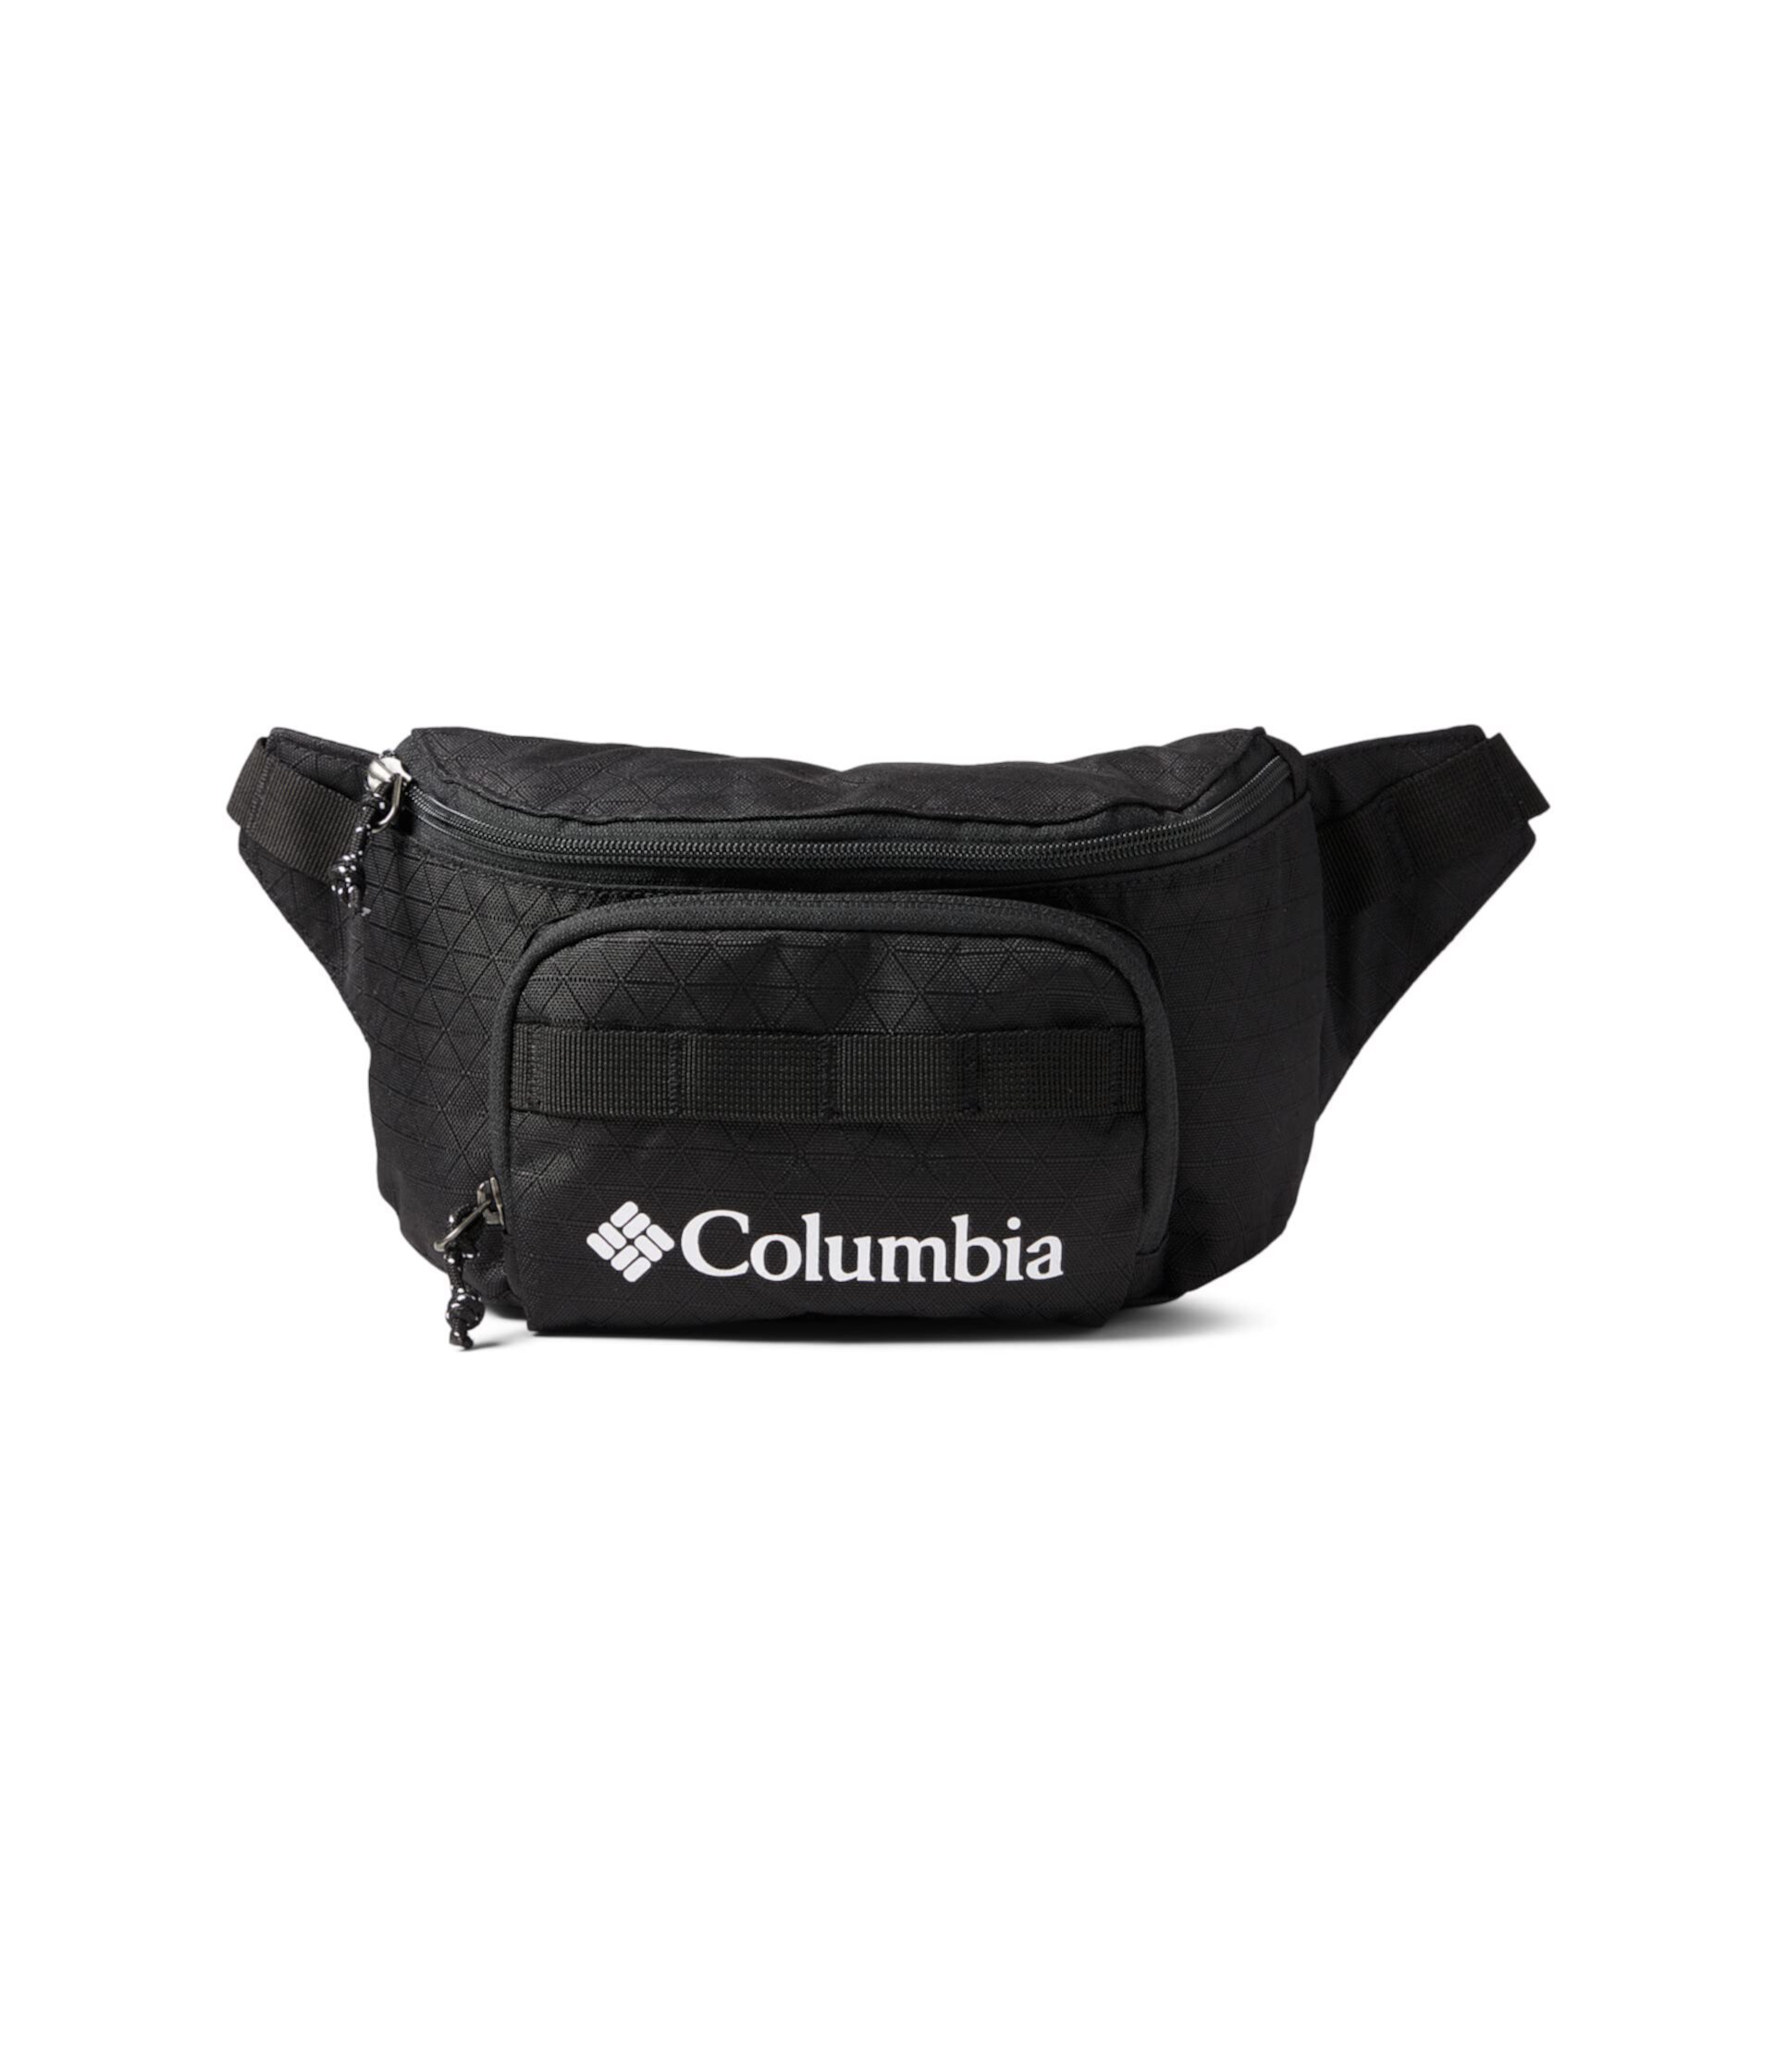 Поясной рюкзак Zigzag™ Columbia